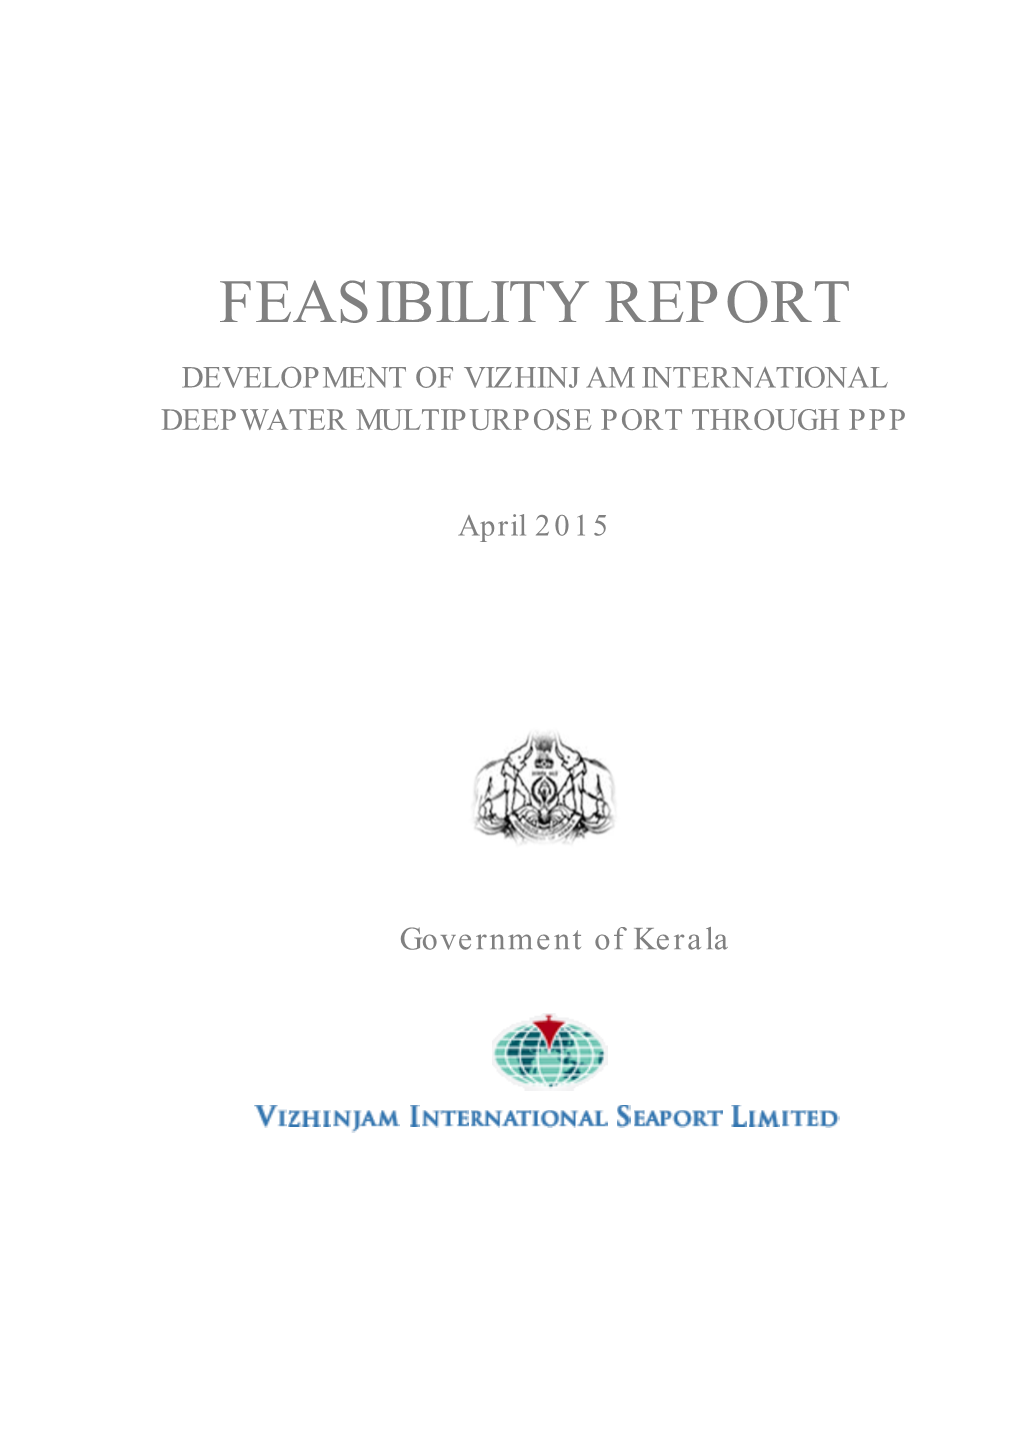 Feasibility Report Development of Vizhinjam International Deepwater Multipurpose Port Through Ppp